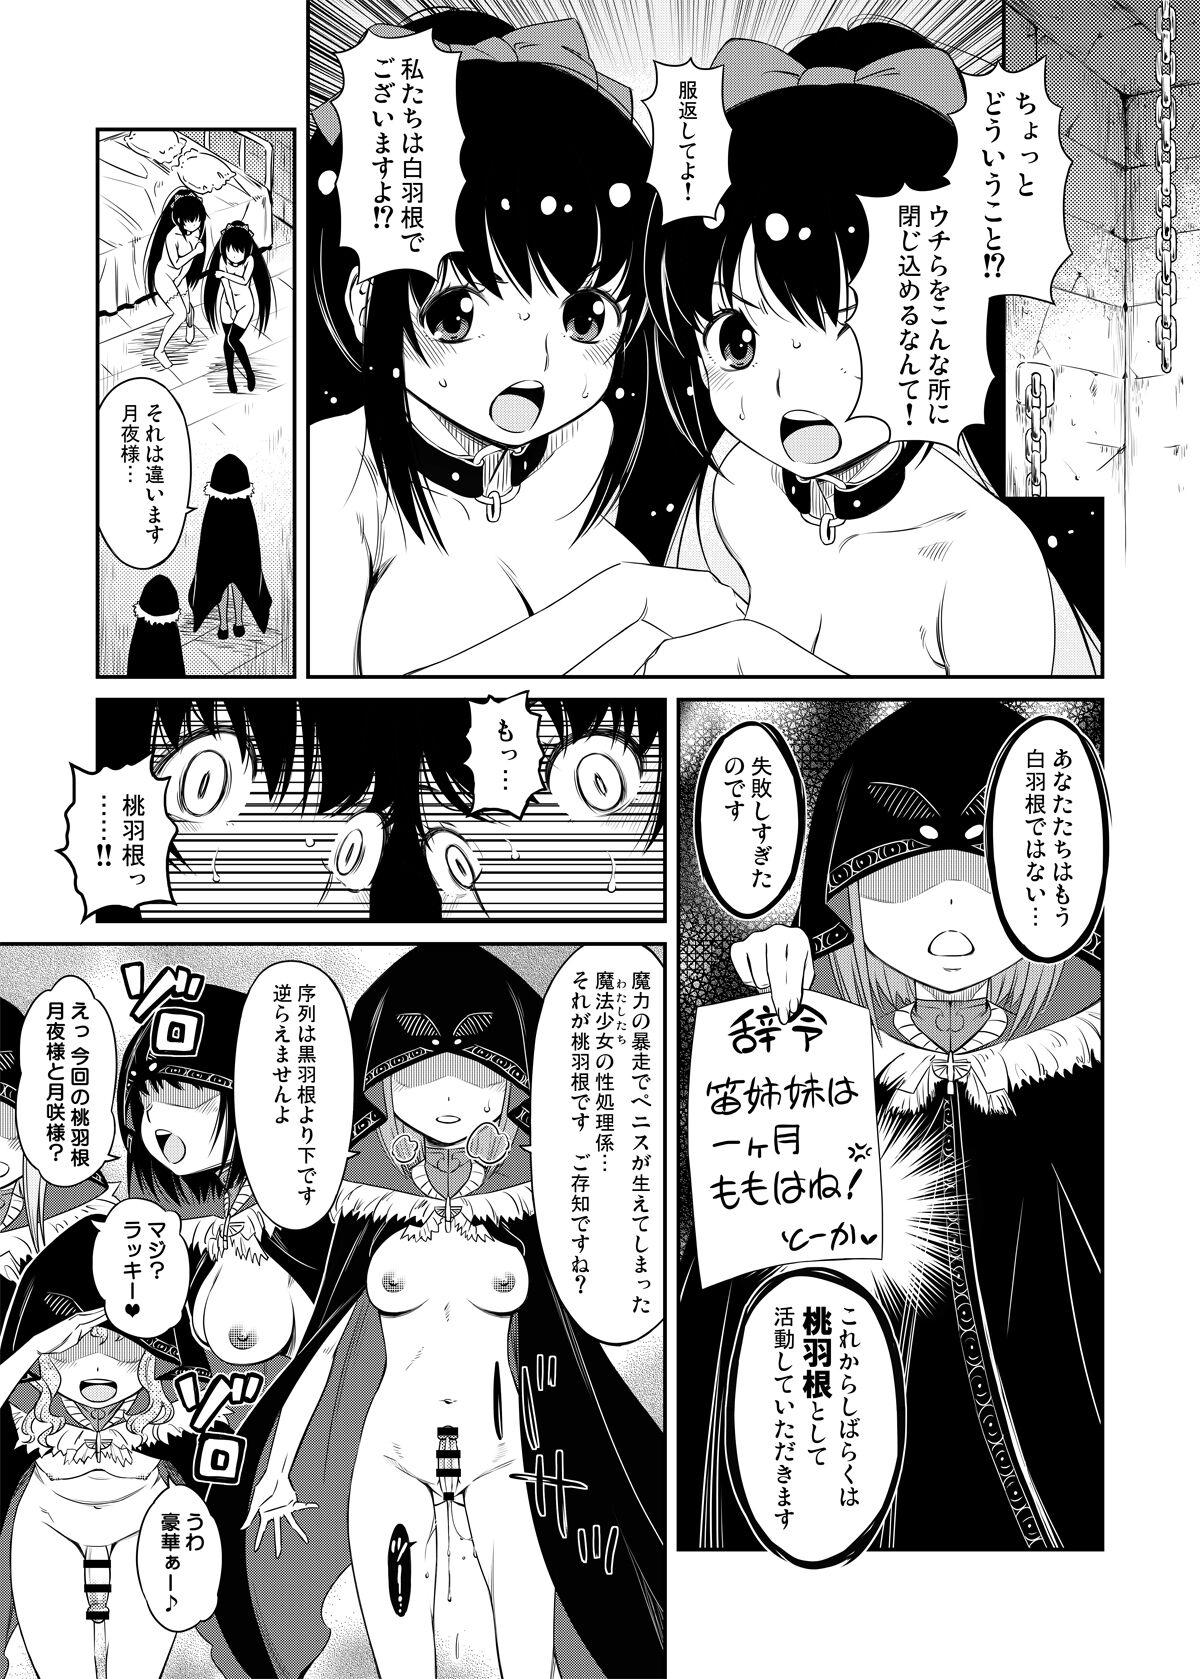 Gorgeous The Amane sisters' Erotic Manga - Puella magi madoka magica side story magia record Lesbians - Page 1